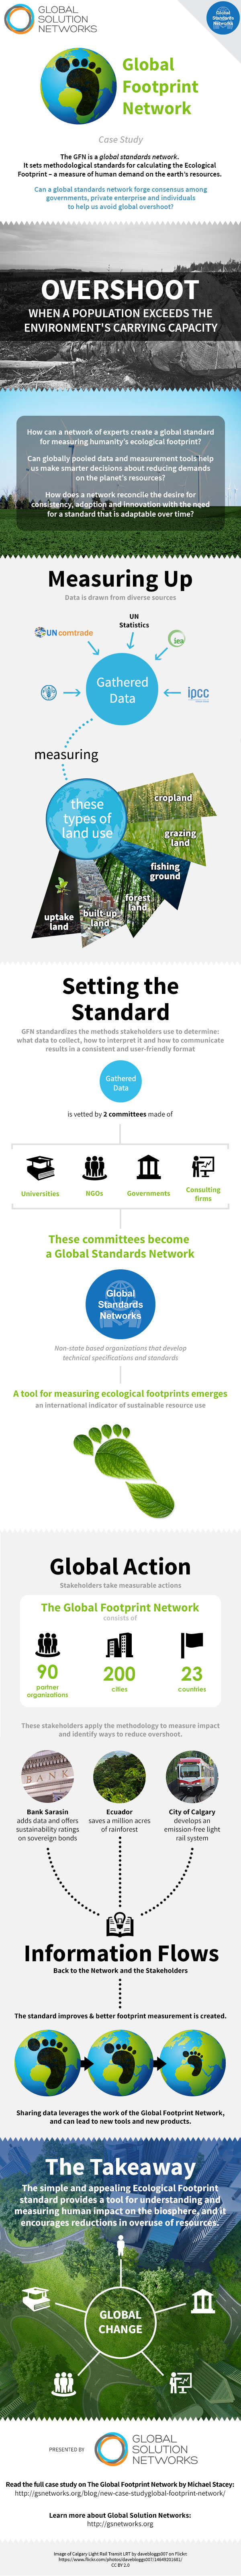 infographic-global-footprint-network